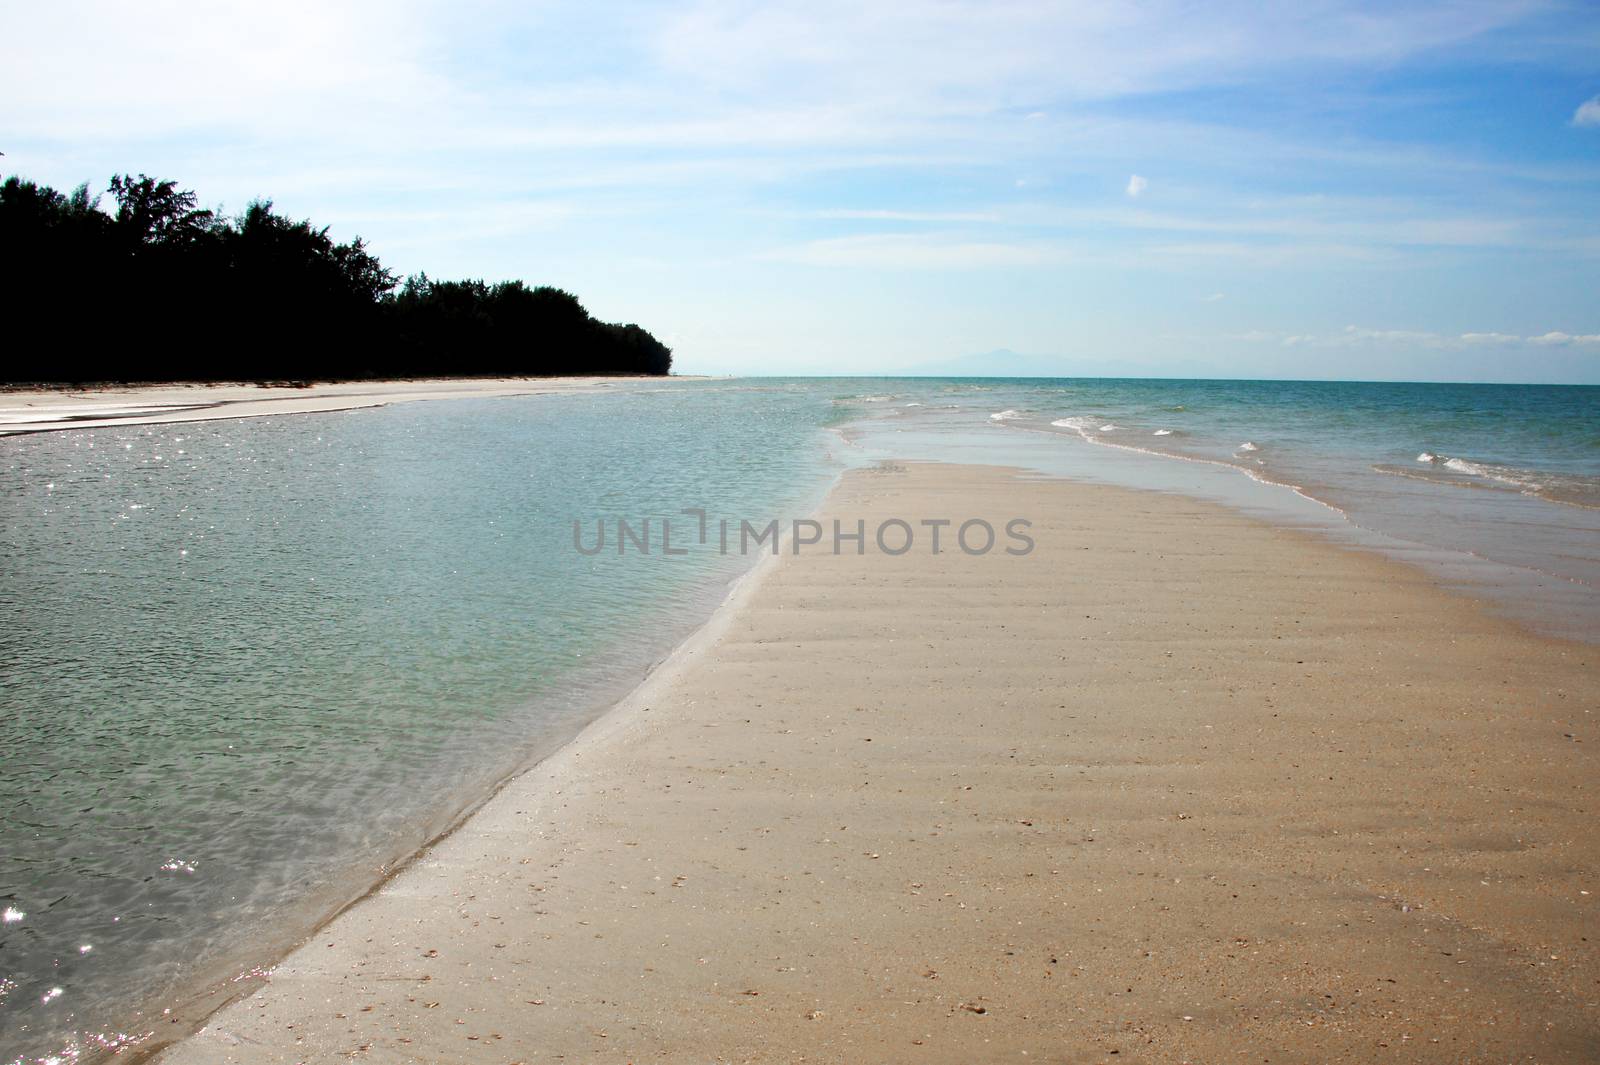 The beaches of Thailand.